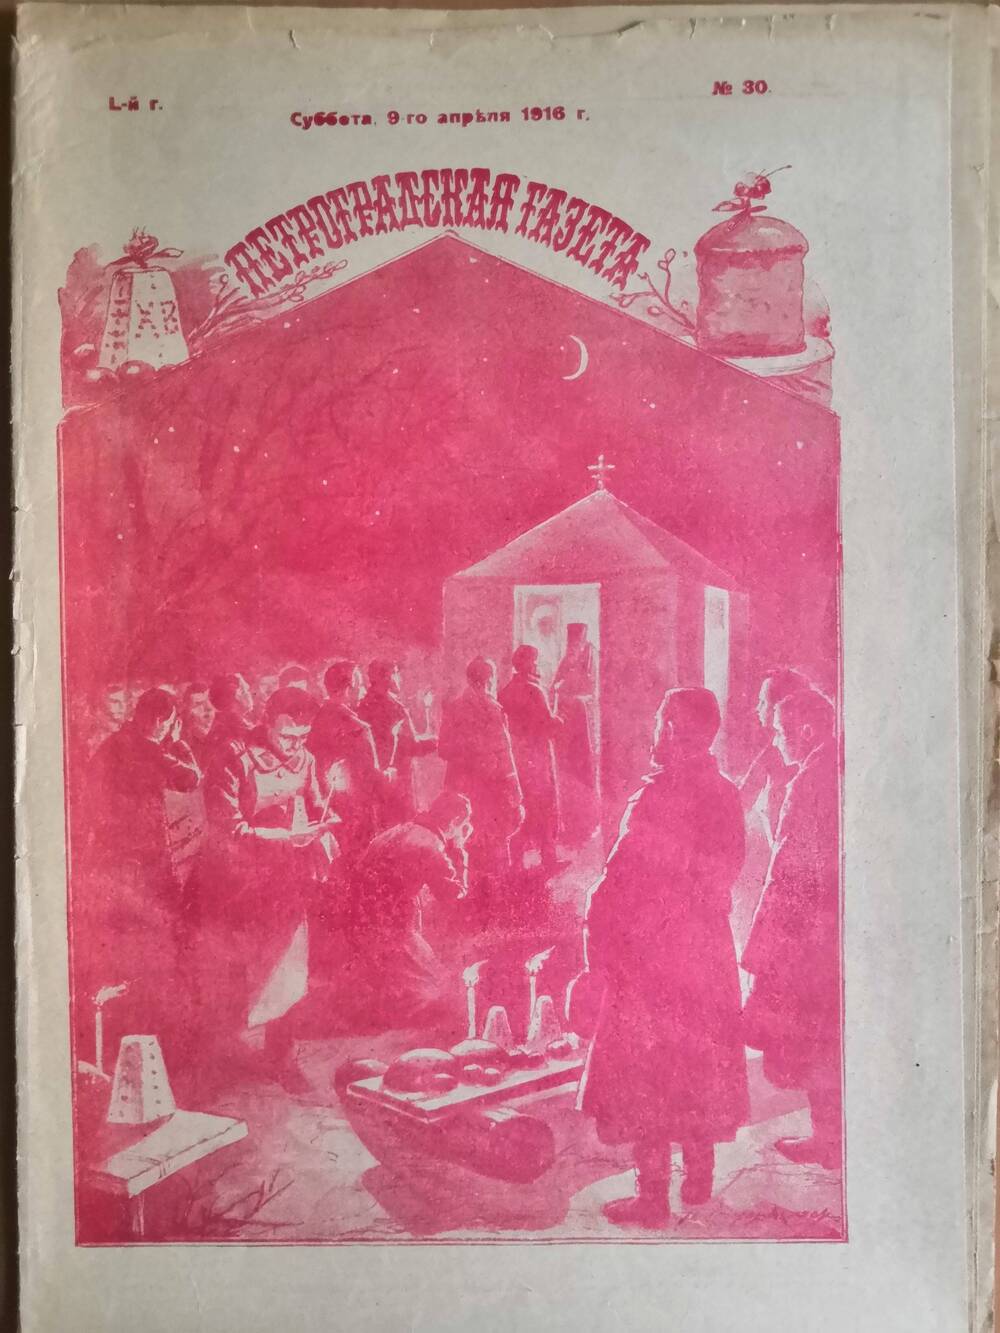 Петроградская газета №30, от субботы 9-го апреля 1916 г.